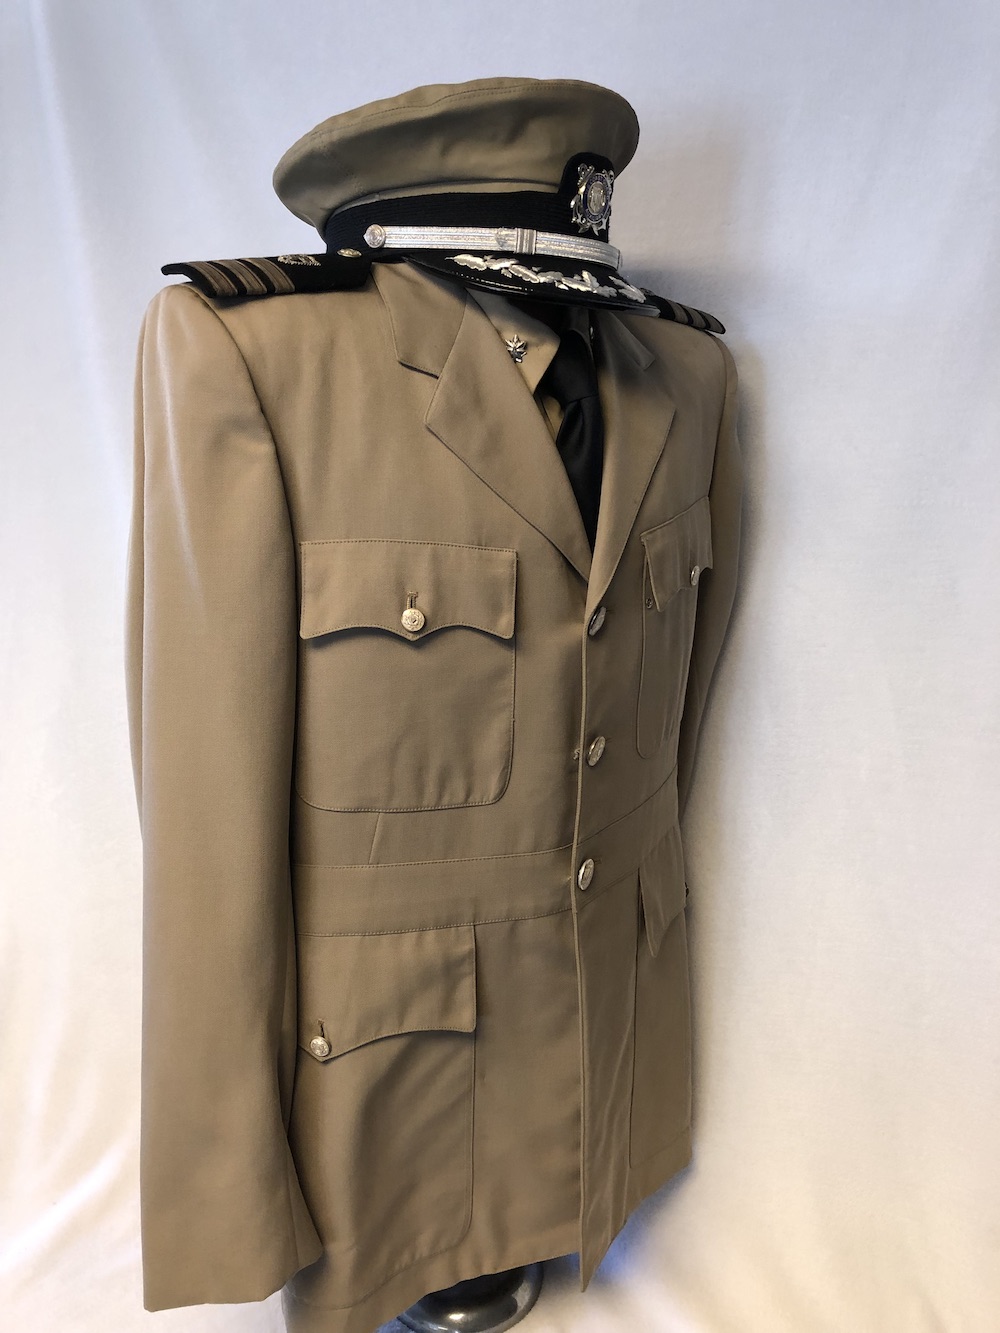 Uniform Service Dress Khaki 1969 right side view